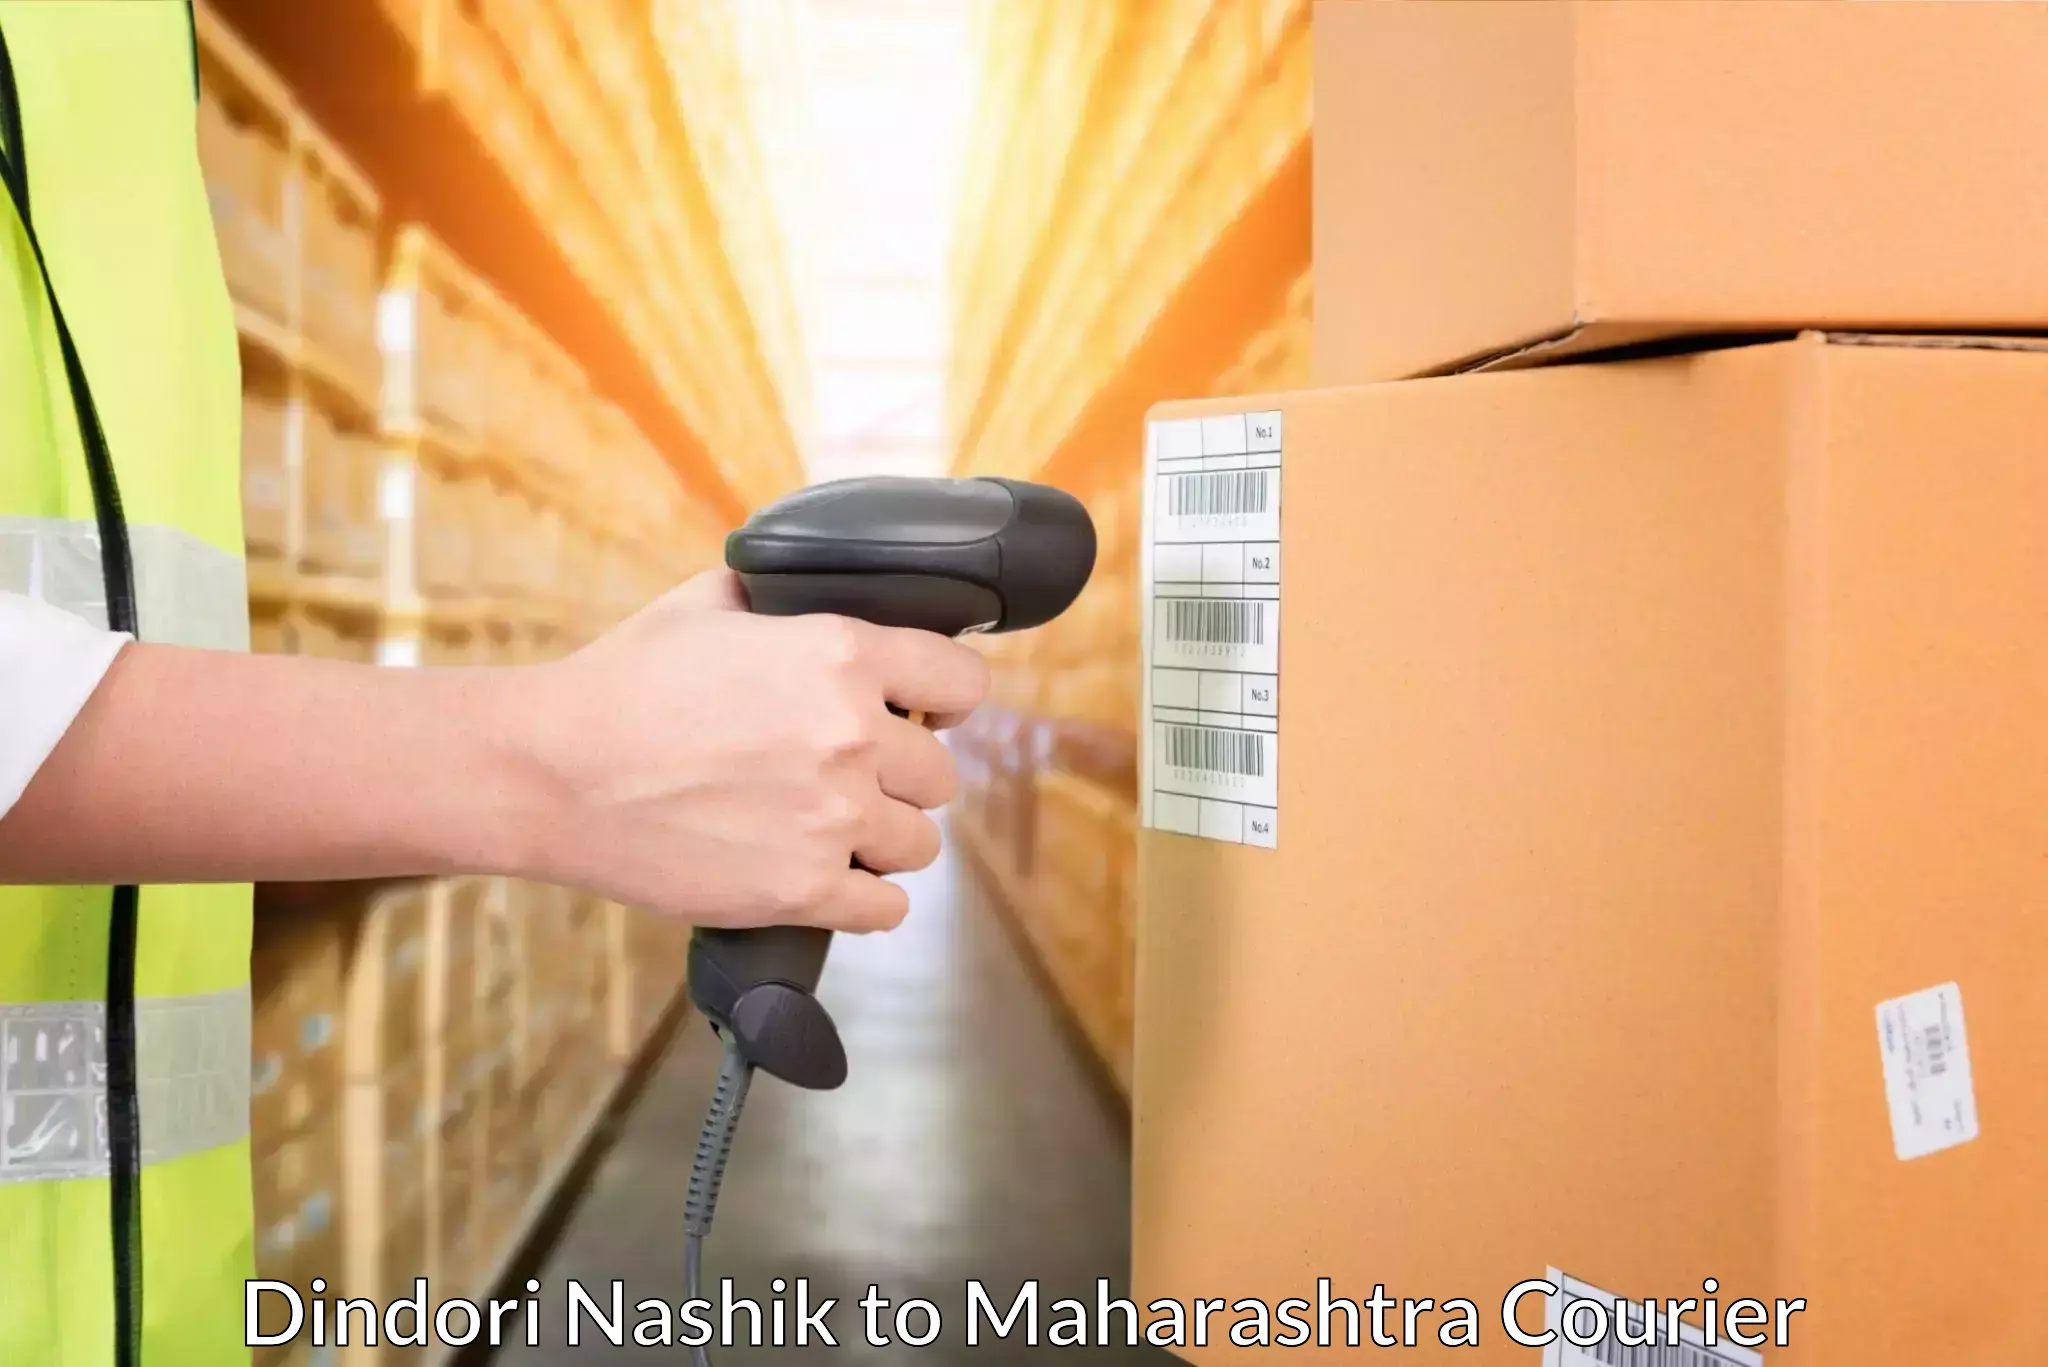 Streamlined delivery processes Dindori Nashik to Bhiwandi